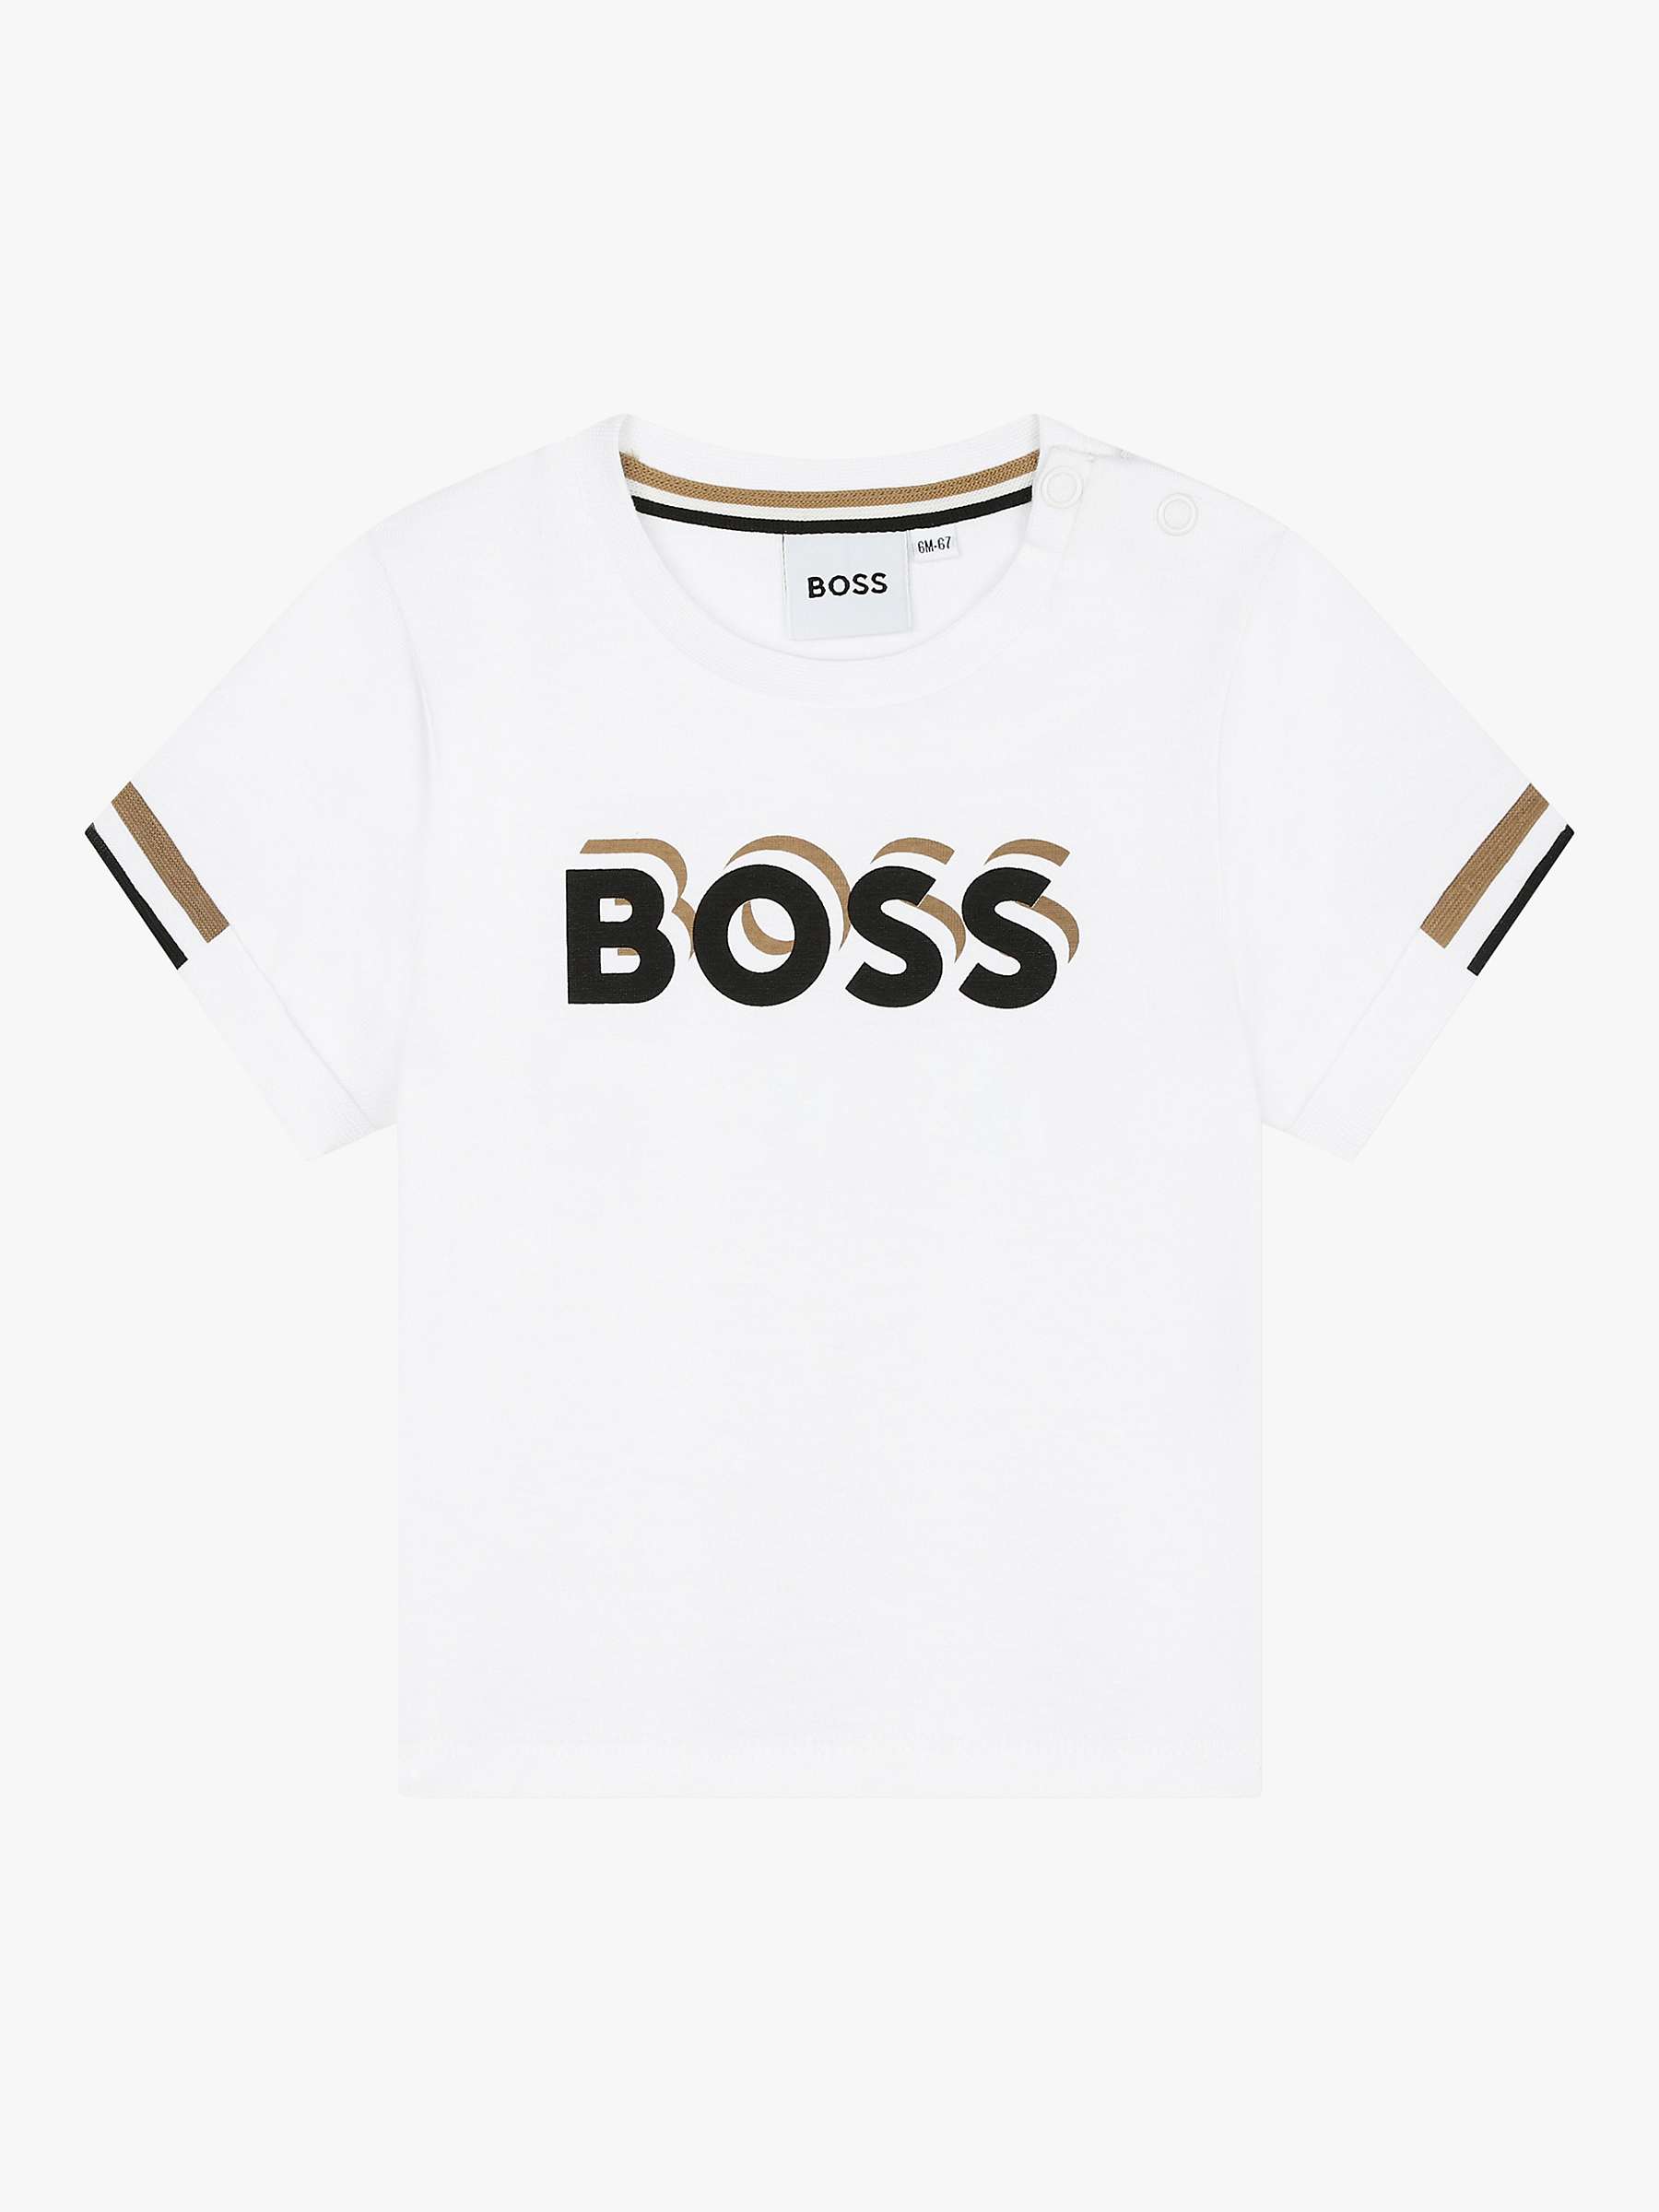 Buy BOSS Baby T-Shirt & Bermuda Short Set, Brown/White Online at johnlewis.com